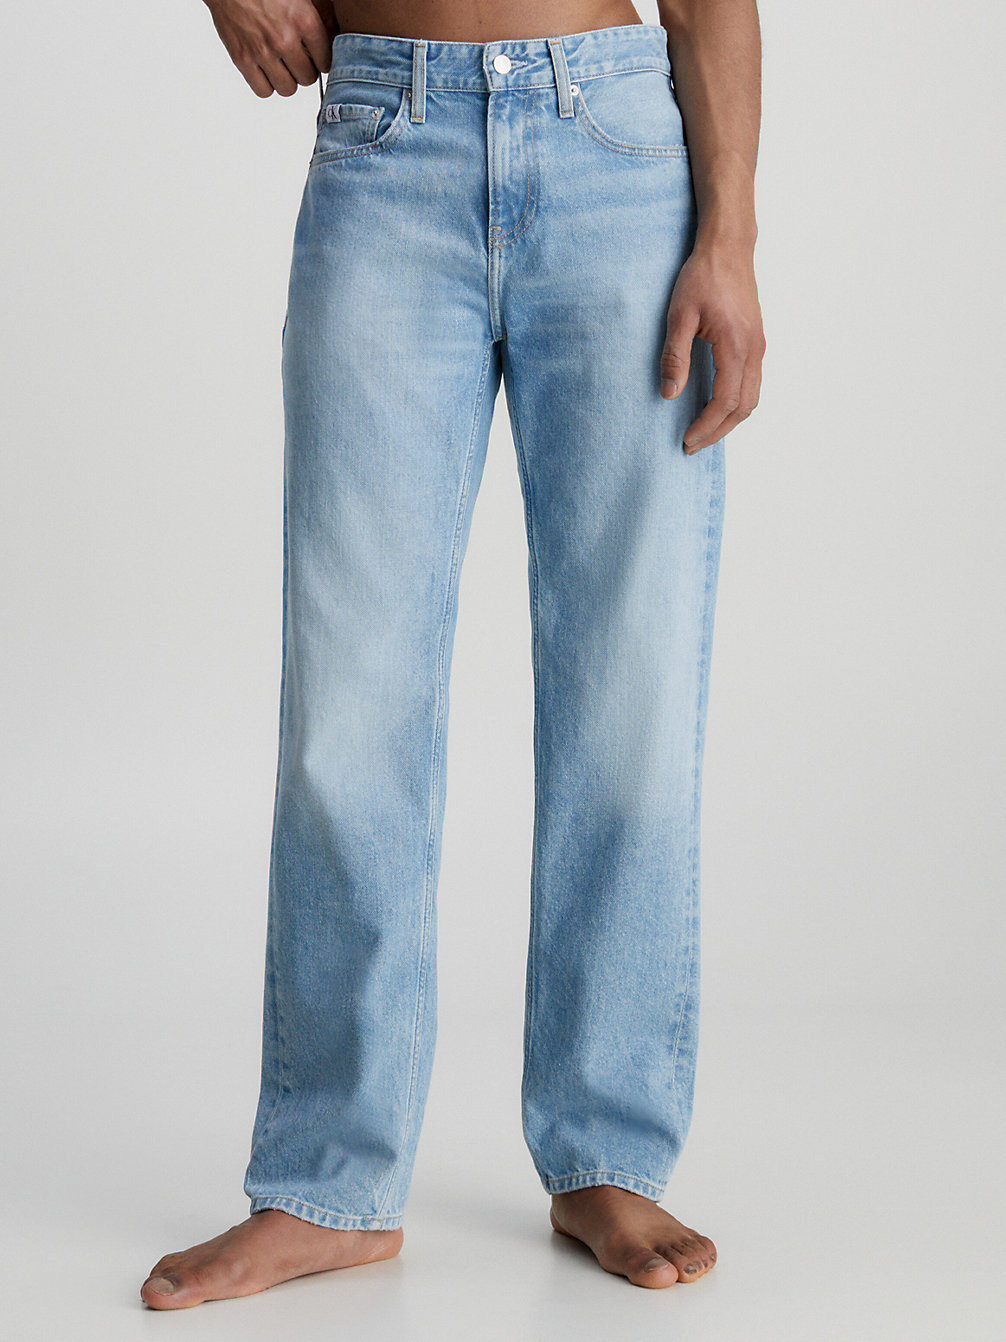 90's Straight Jeans Reciclados > DENIM LIGHT > undefined hombre > Calvin Klein